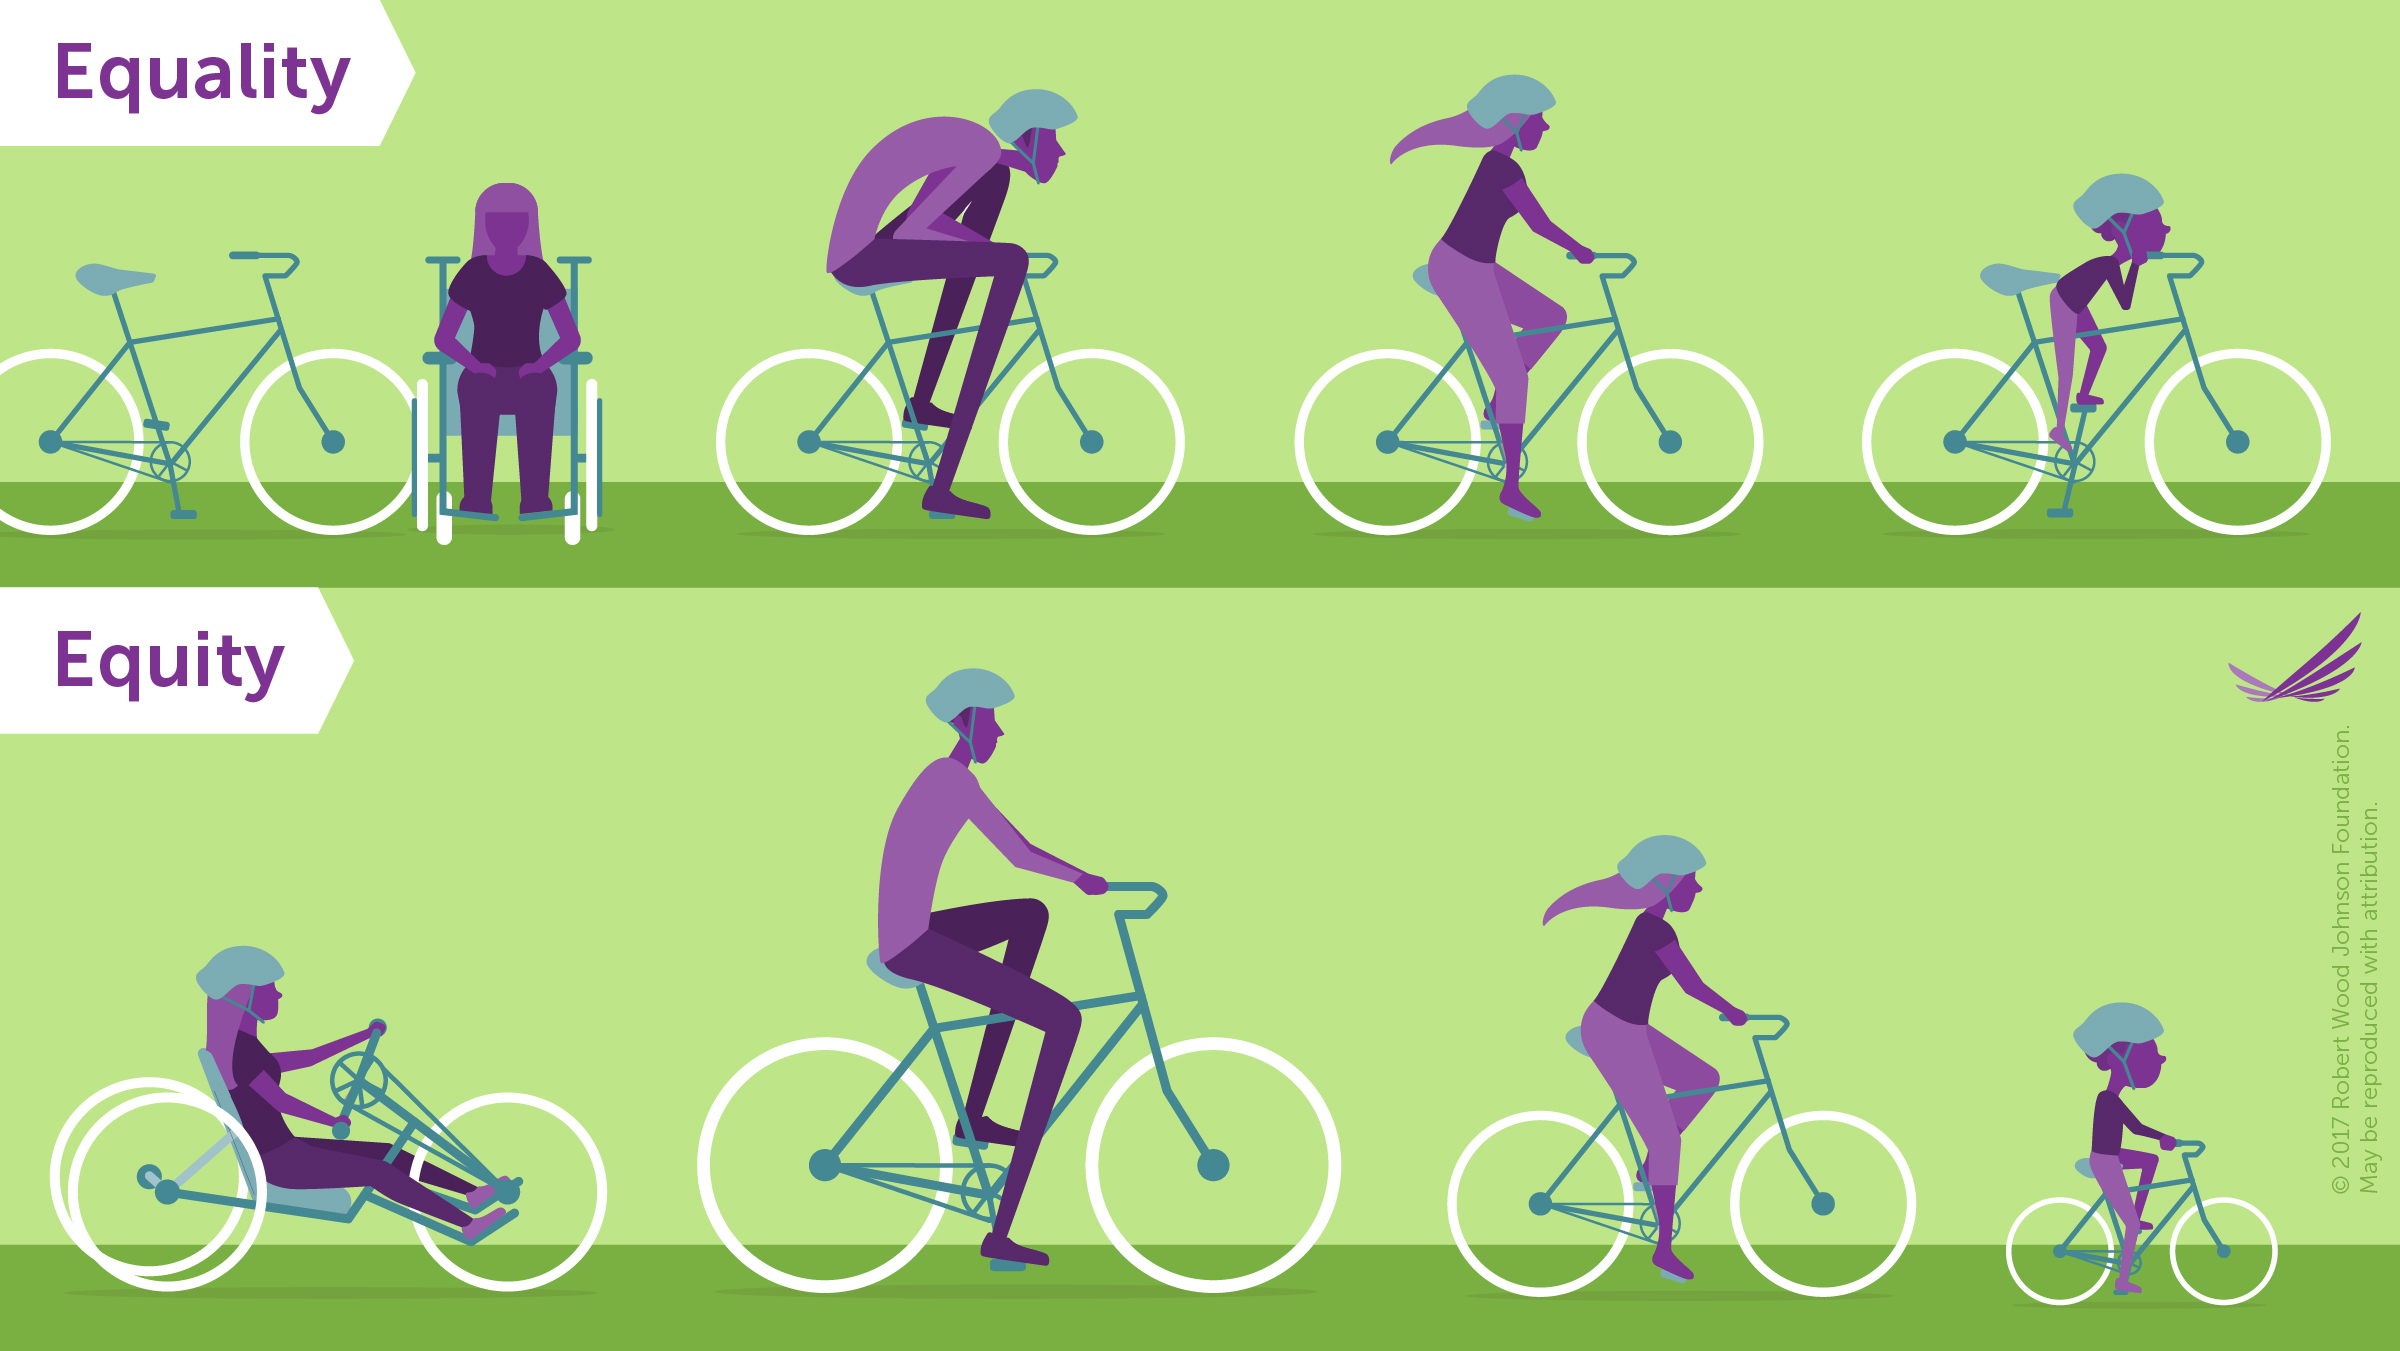 Equality vs. Equity Bikes